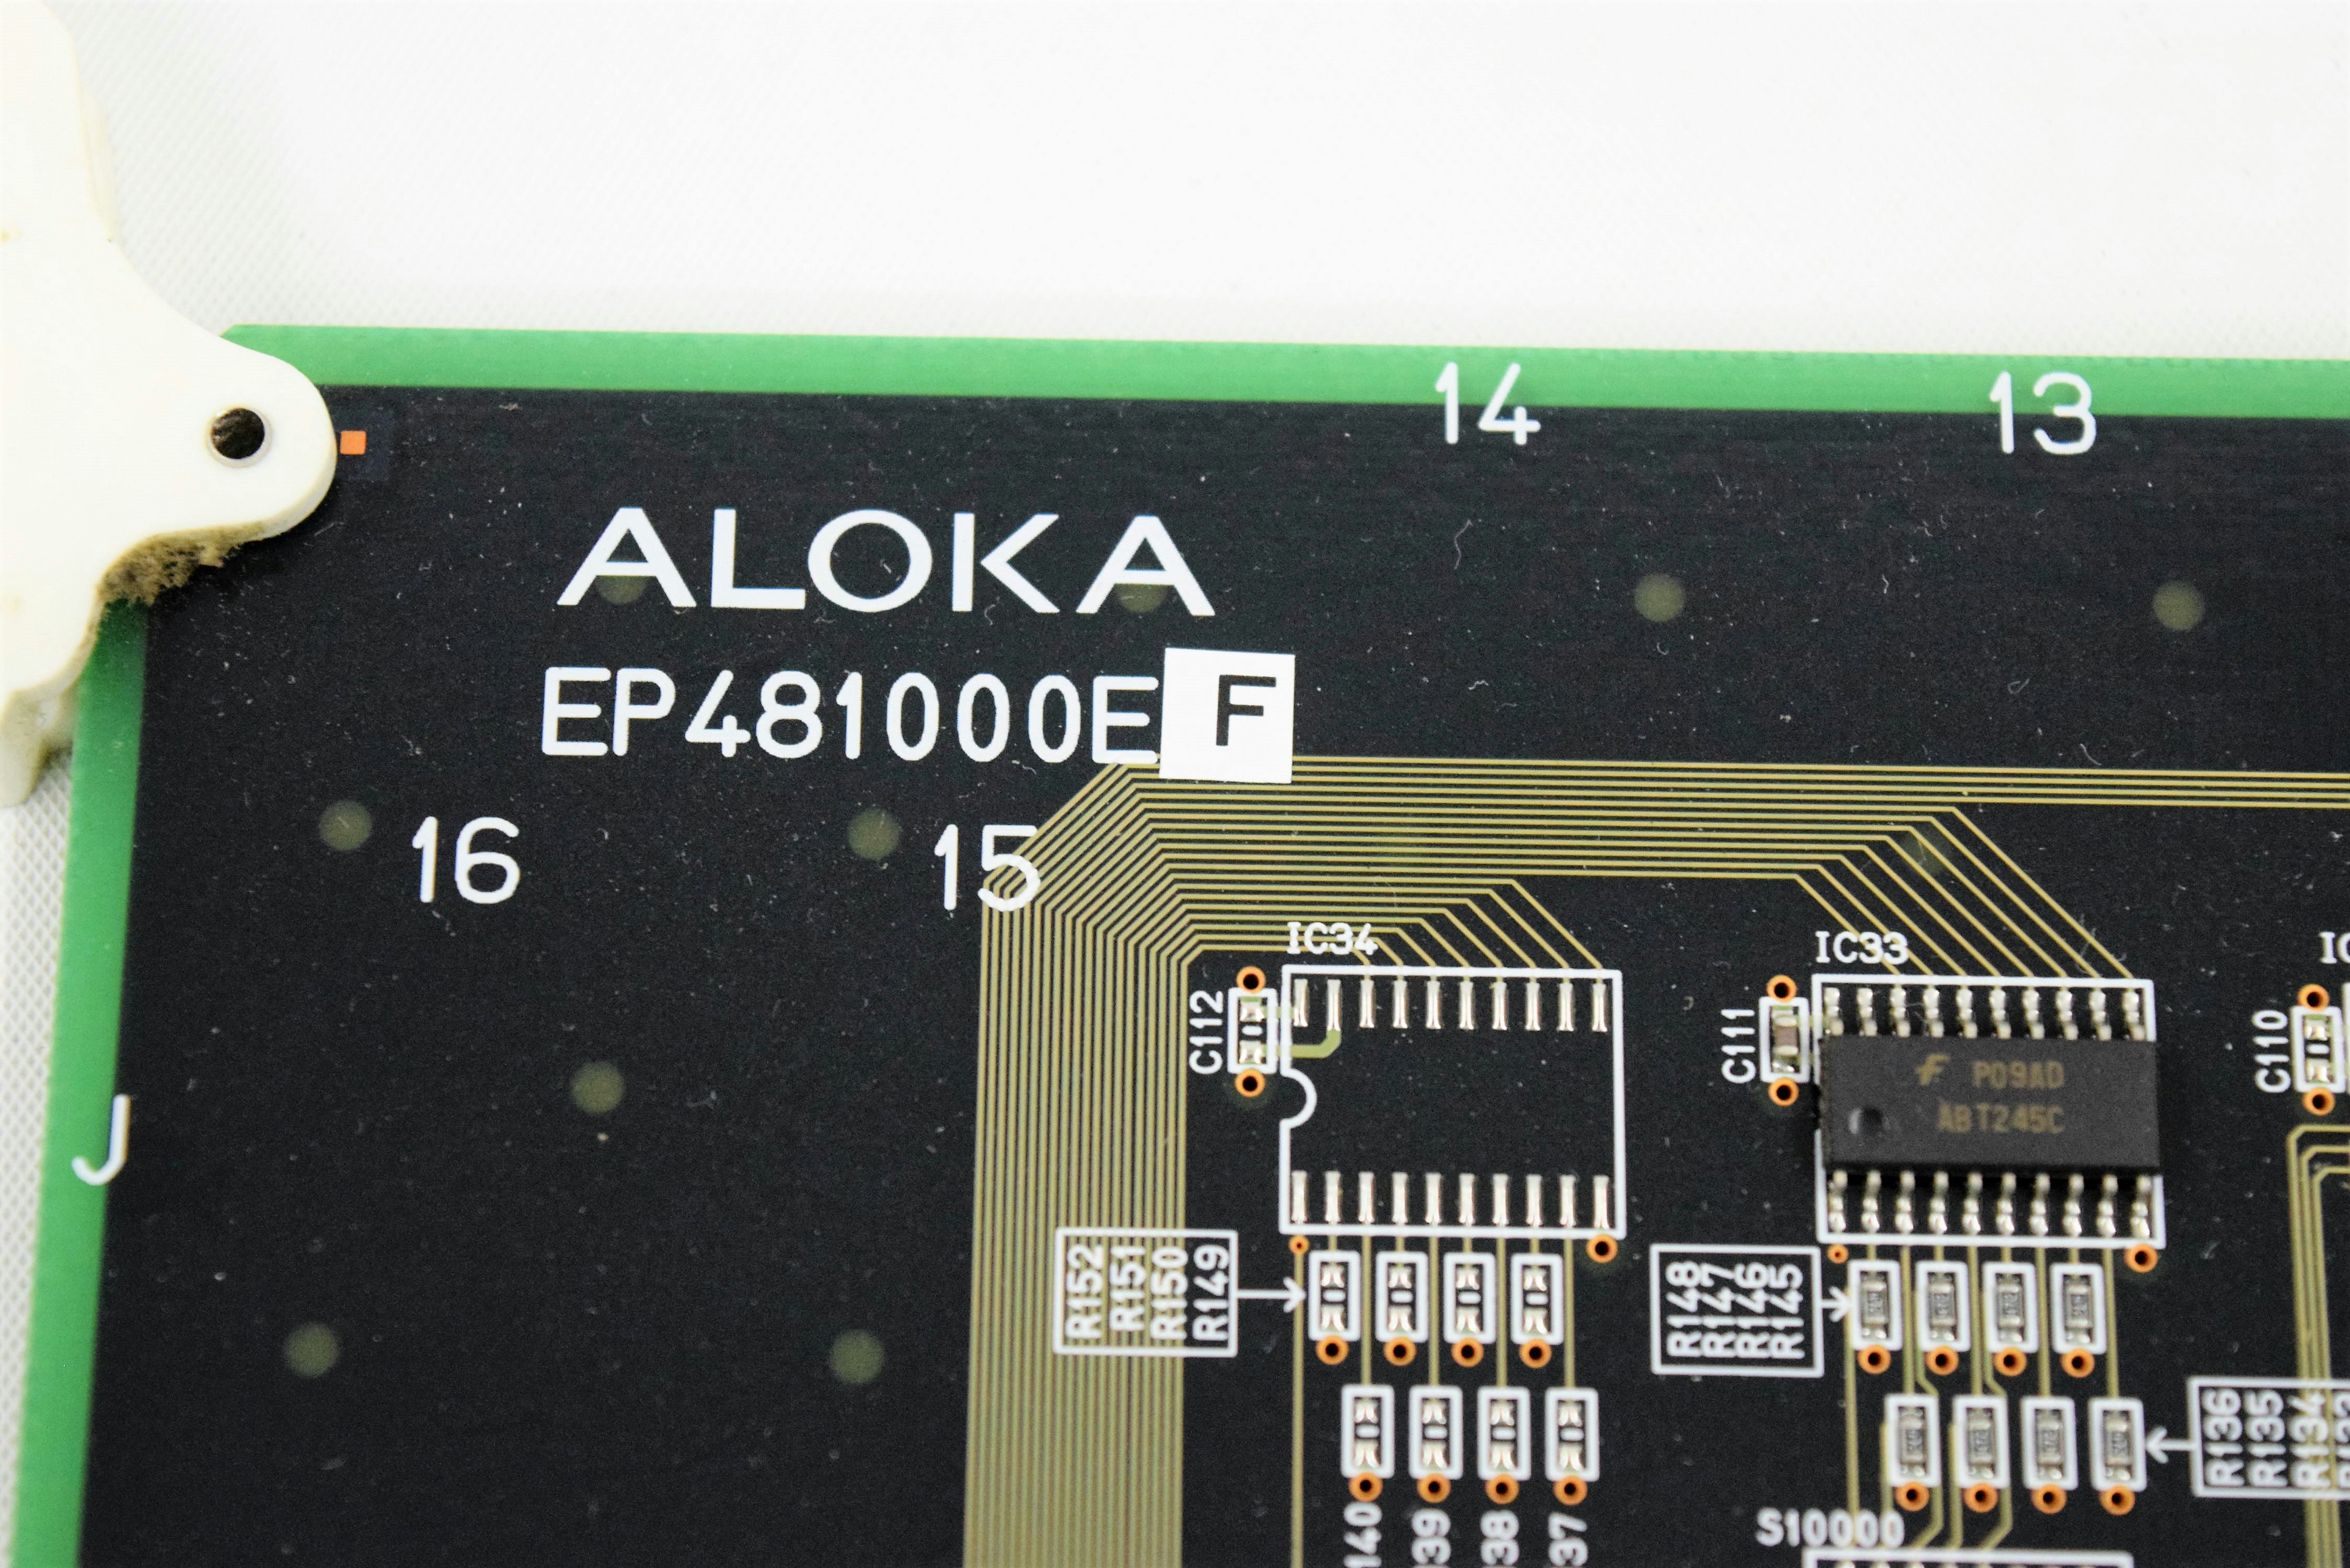 Aloka Prosound SSD-3500 Plus Ultrasound System Board EP481000EF DIAGNOSTIC ULTRASOUND MACHINES FOR SALE